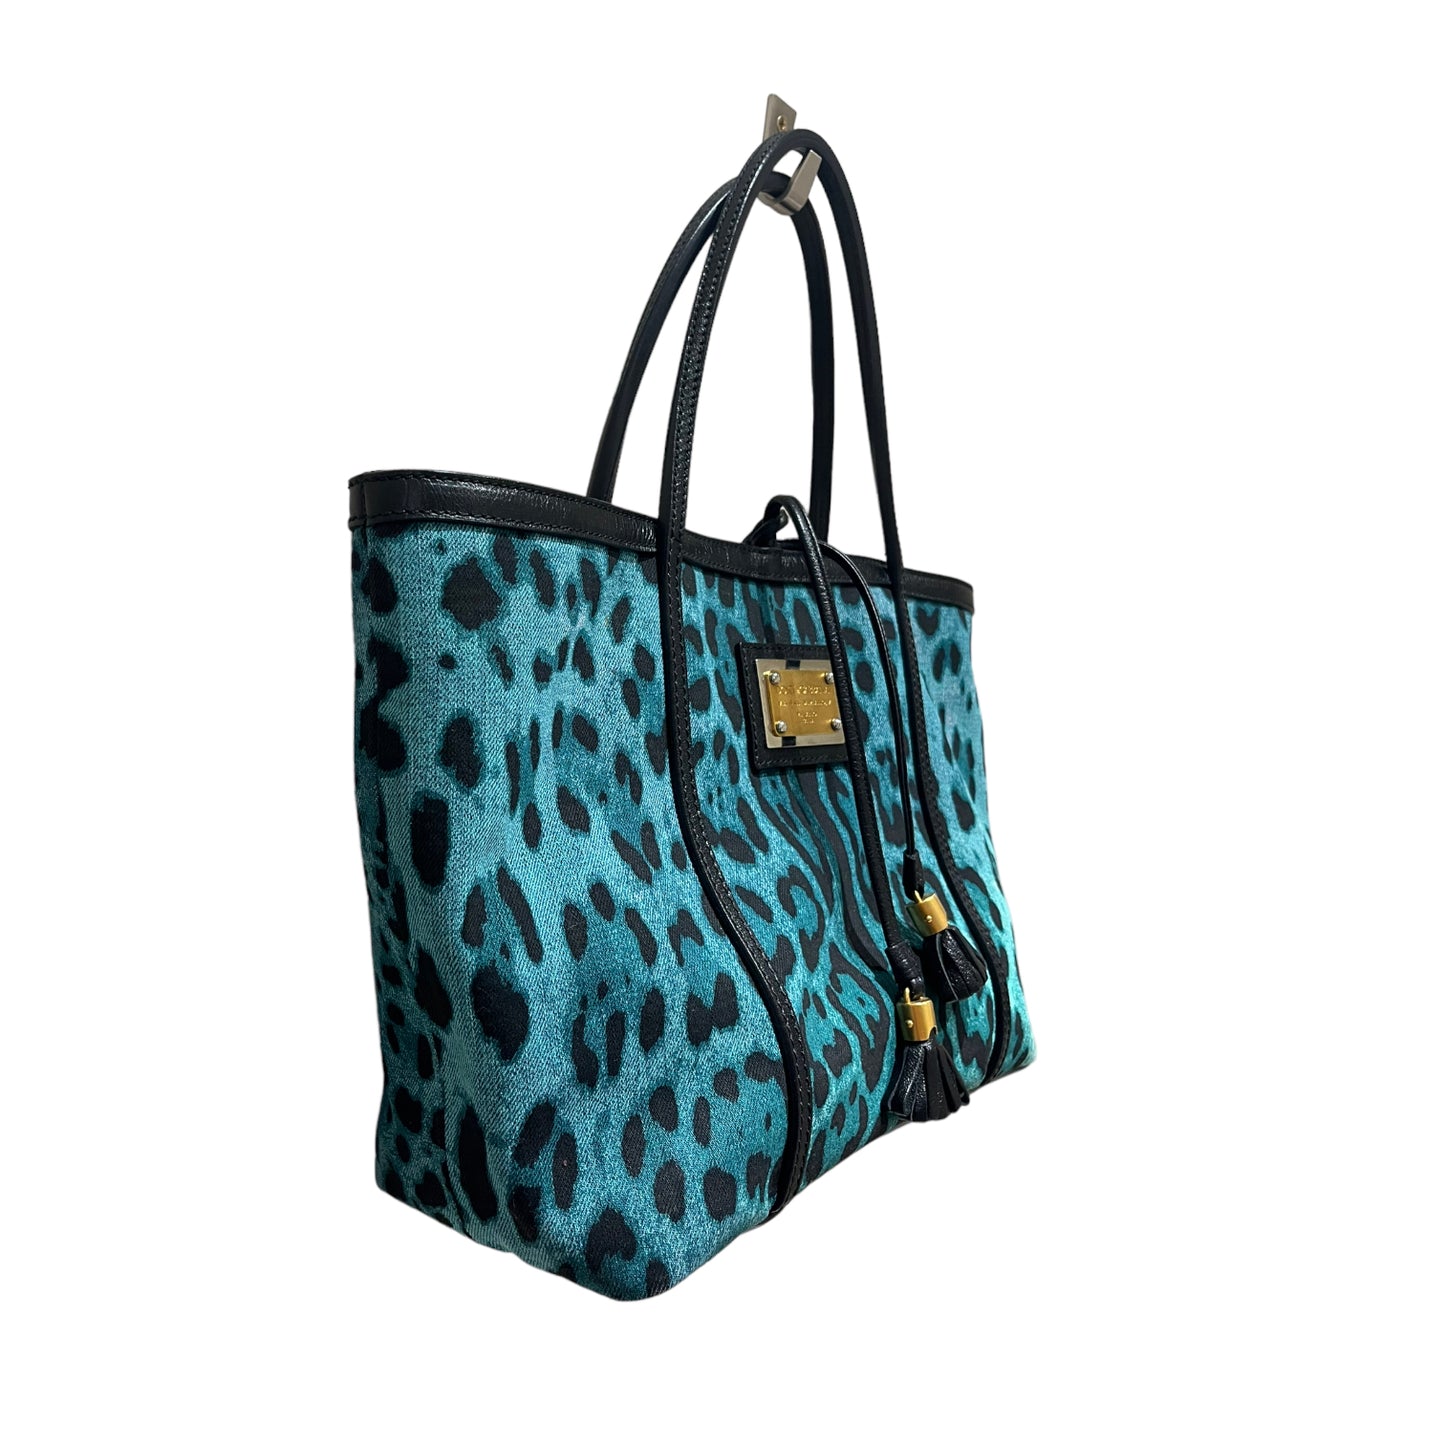 Dolce and Gabbana Blue Animal Print Tote Bag